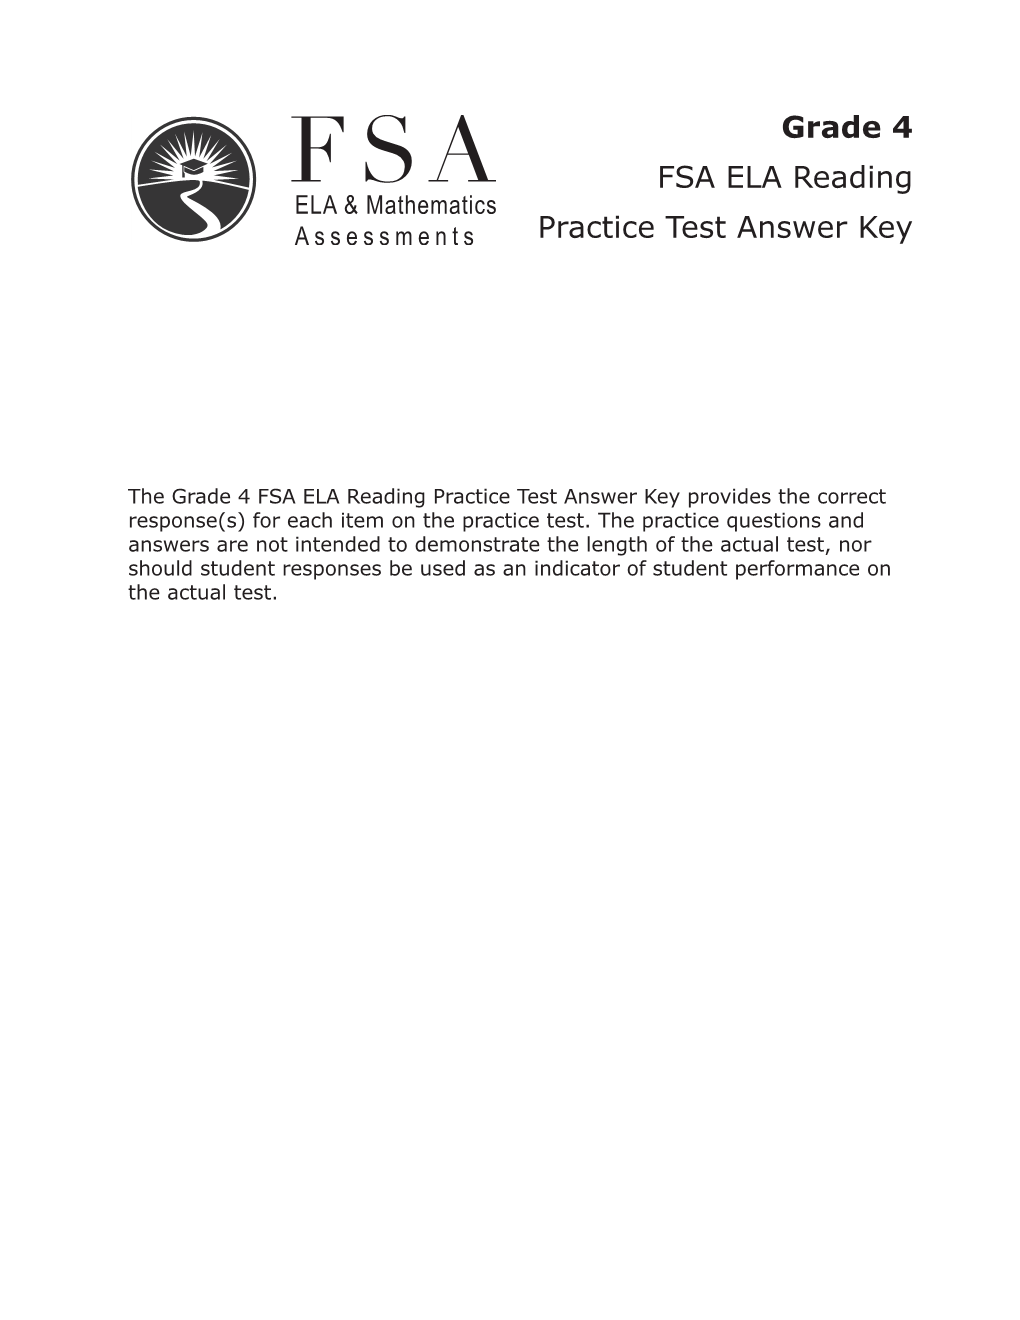 Grade 4 FSA ELA Reading Paper-Based Practice Test Answer